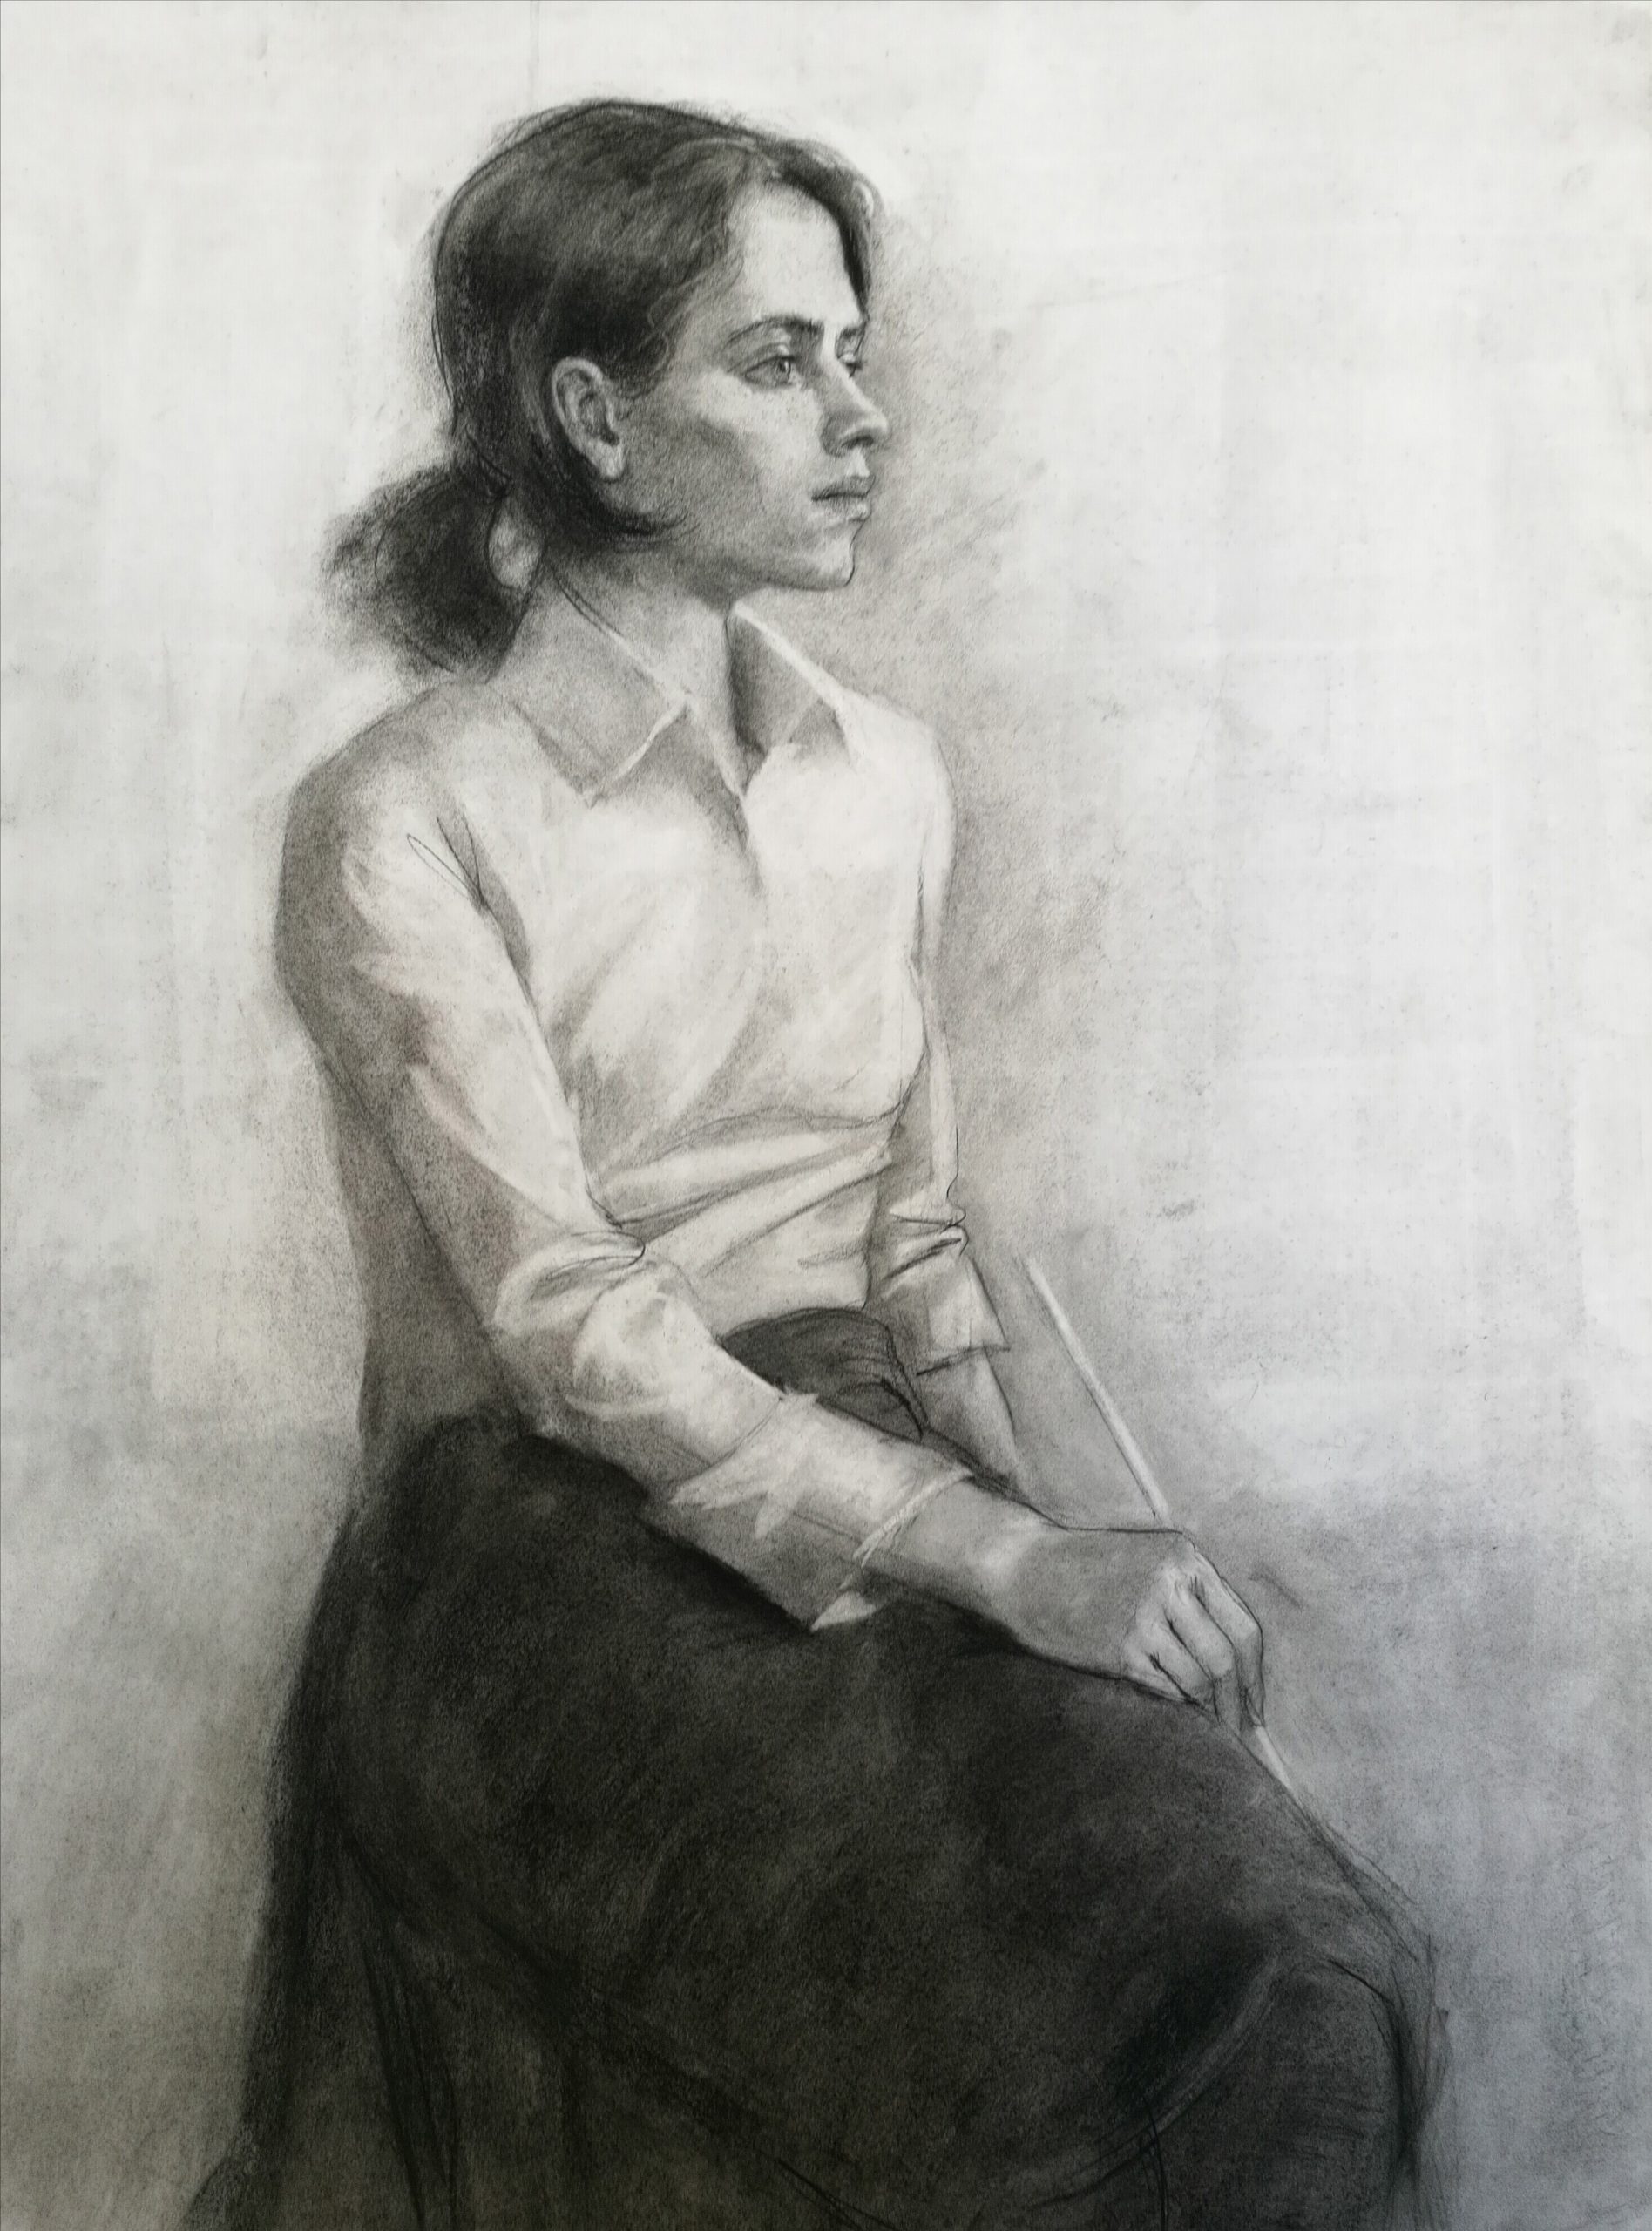 Portrait drawing